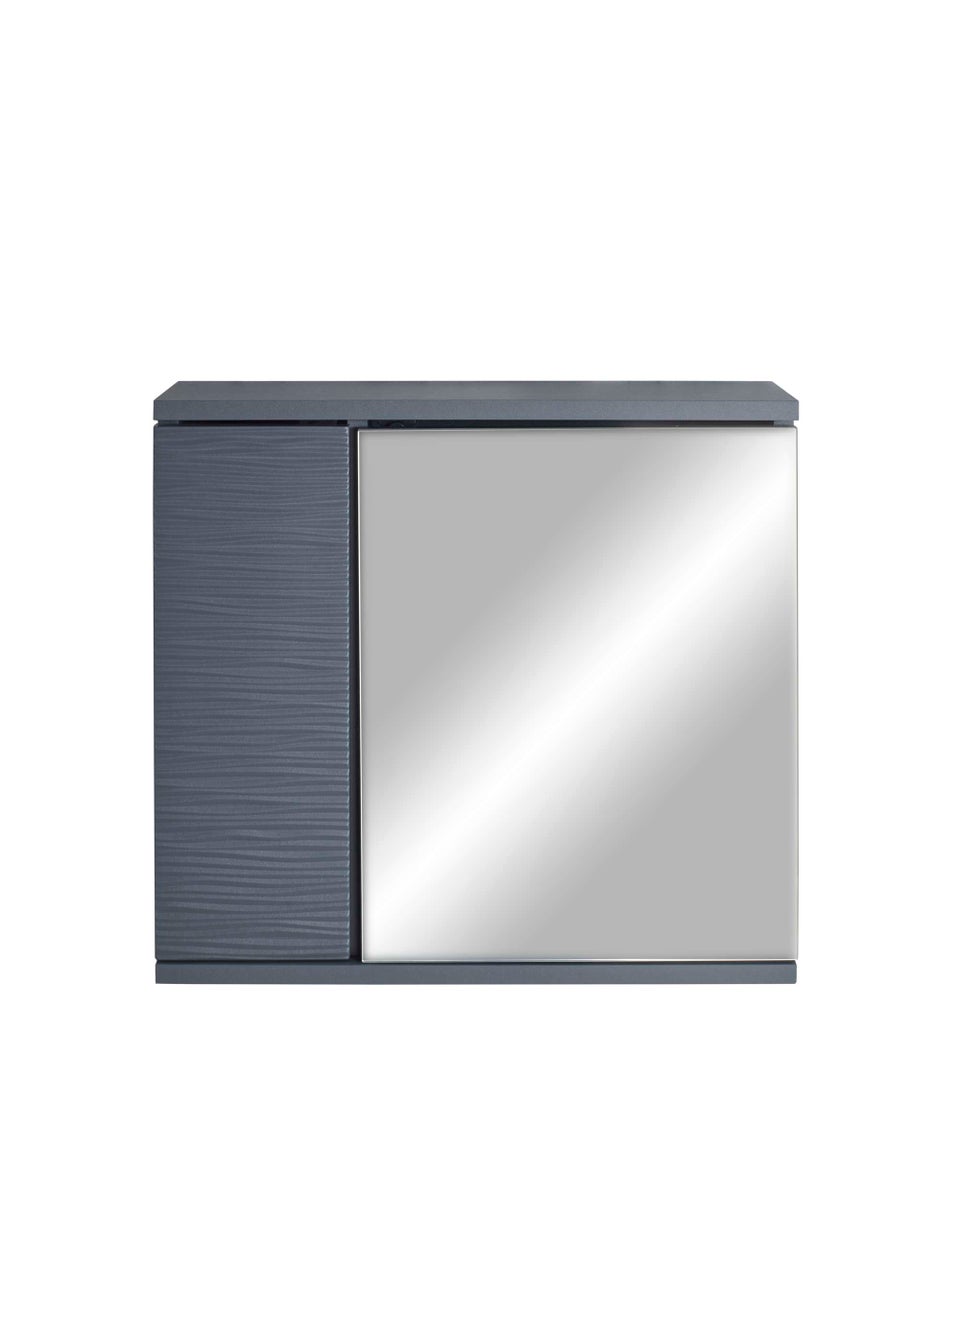 Lloyd Pascal Olsen Ripple Mirror Cabinet (45cm x 48cm x 14.5cm)